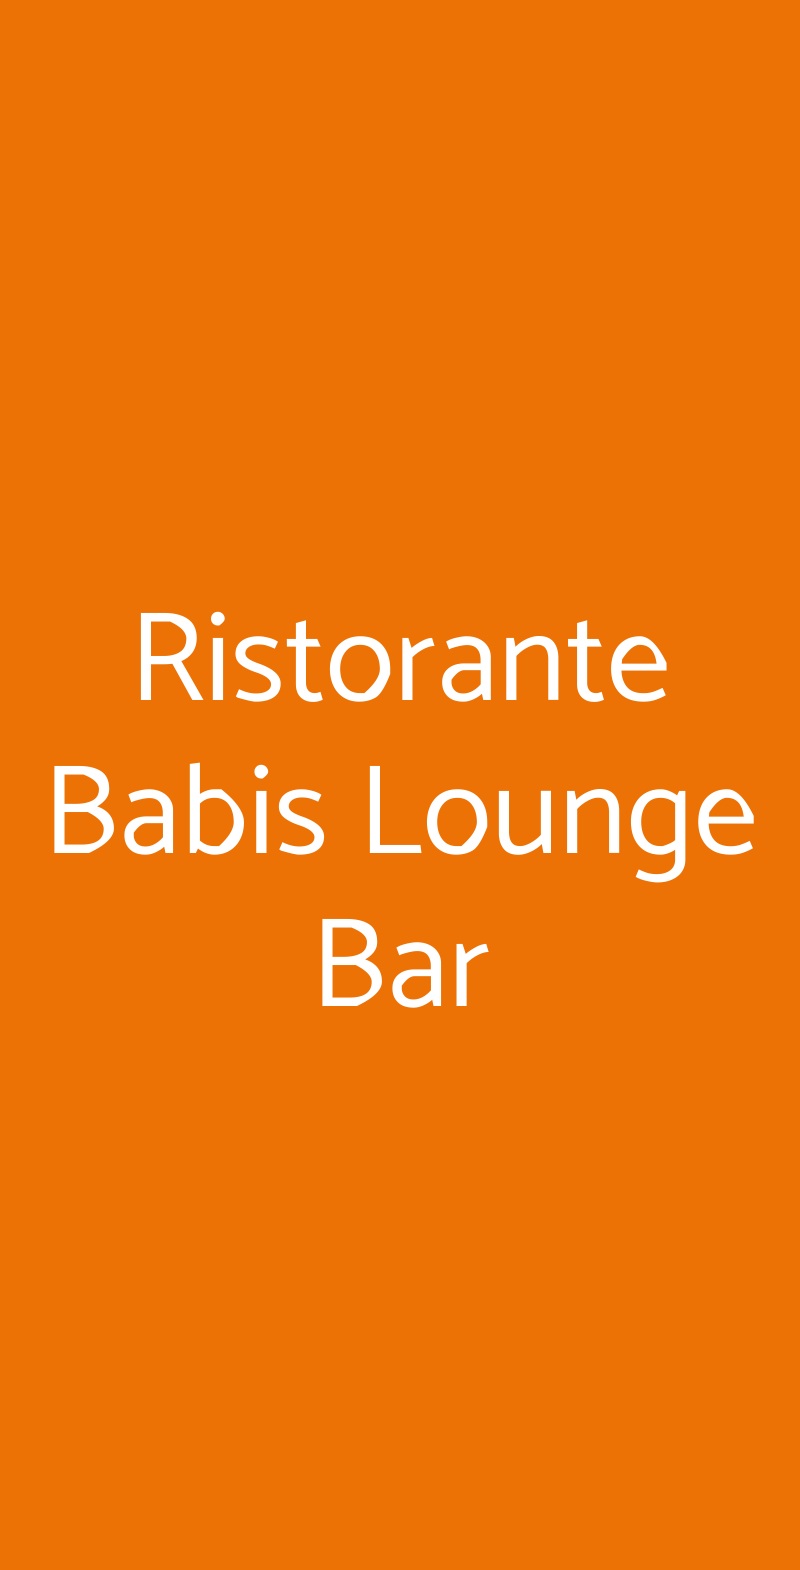 Ristorante Babis Lounge Bar Roma menù 1 pagina